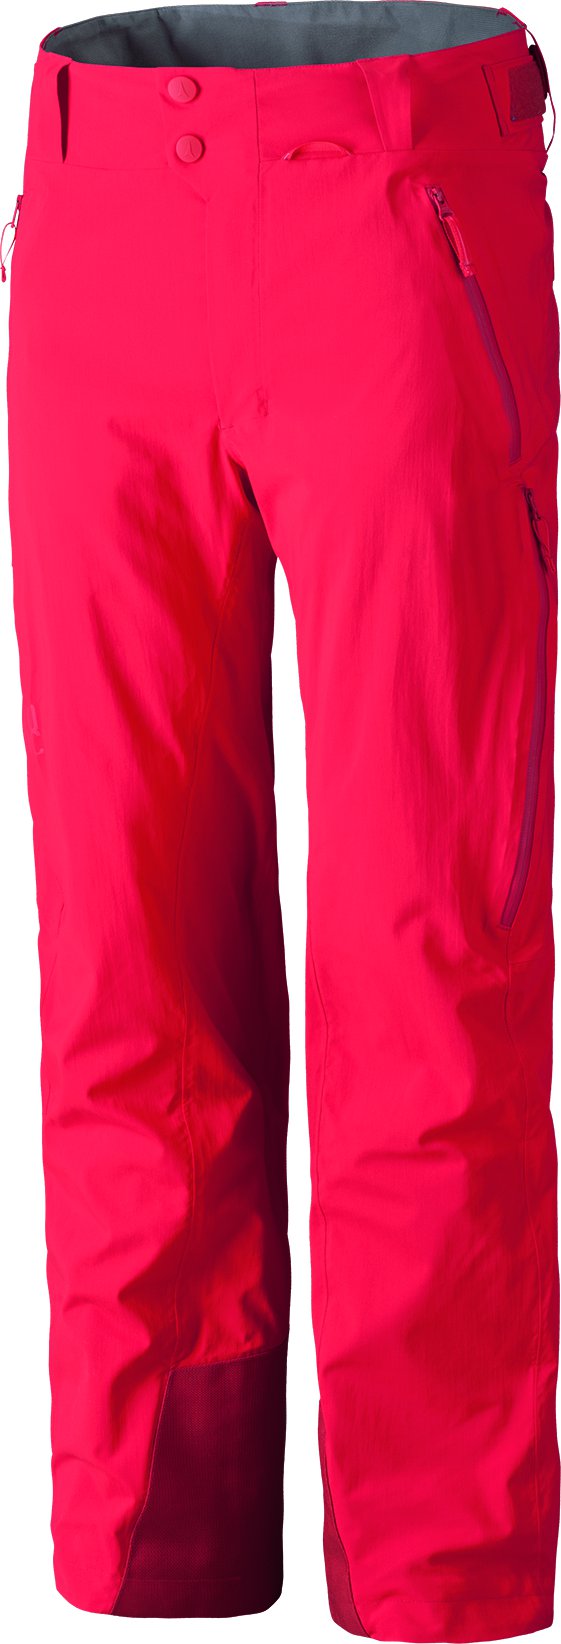 Kolekce Atomic Skiwear - řada Treeline - kalhoty